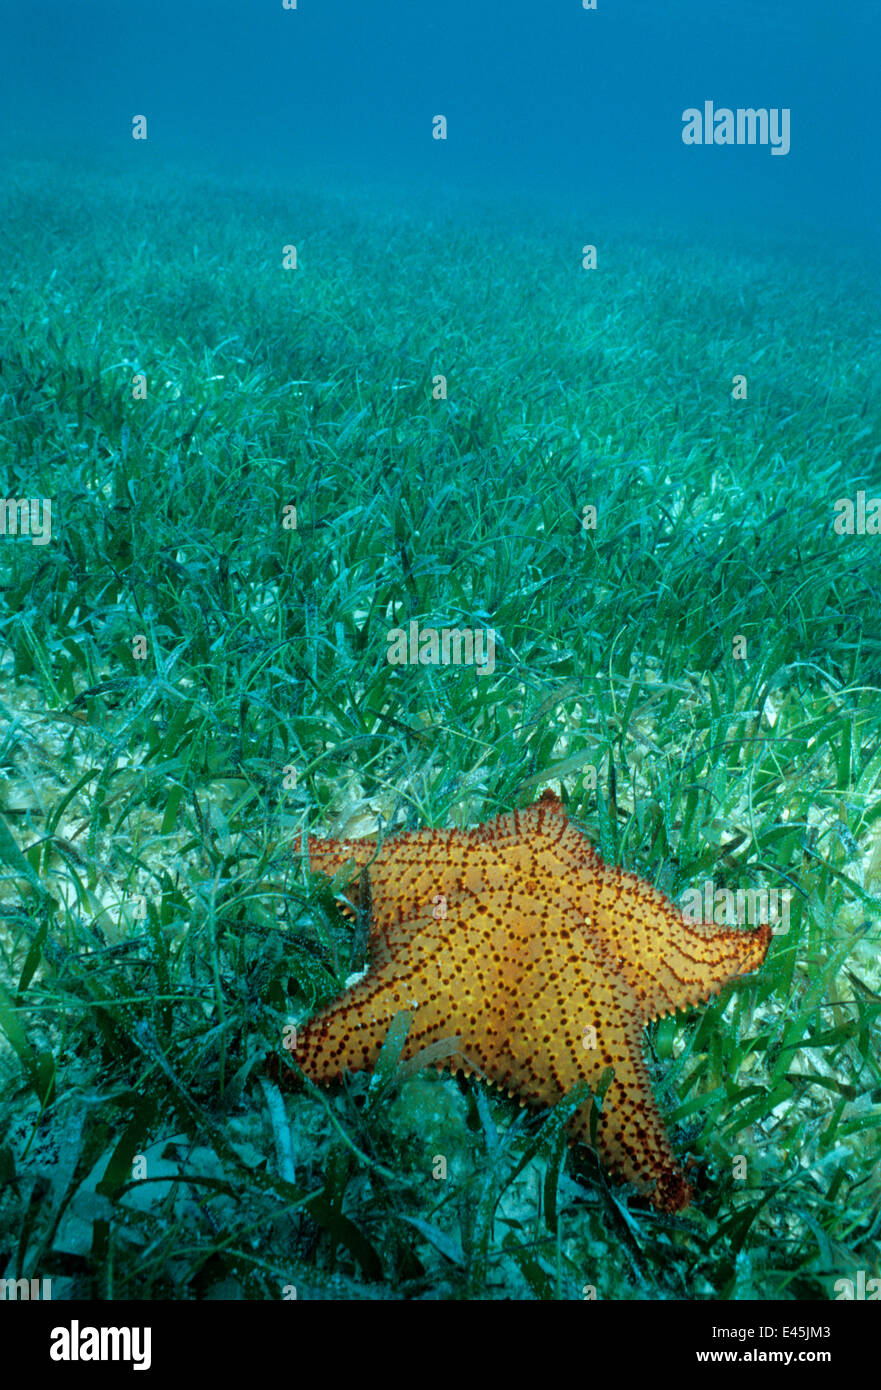 Cushion sea star (Oreaster reticulatus) on Turtle grass (Thalassia testudinum) Banco Chinchorro Biosphere Reserve, Caribbean Sea, Mexico Stock Photo